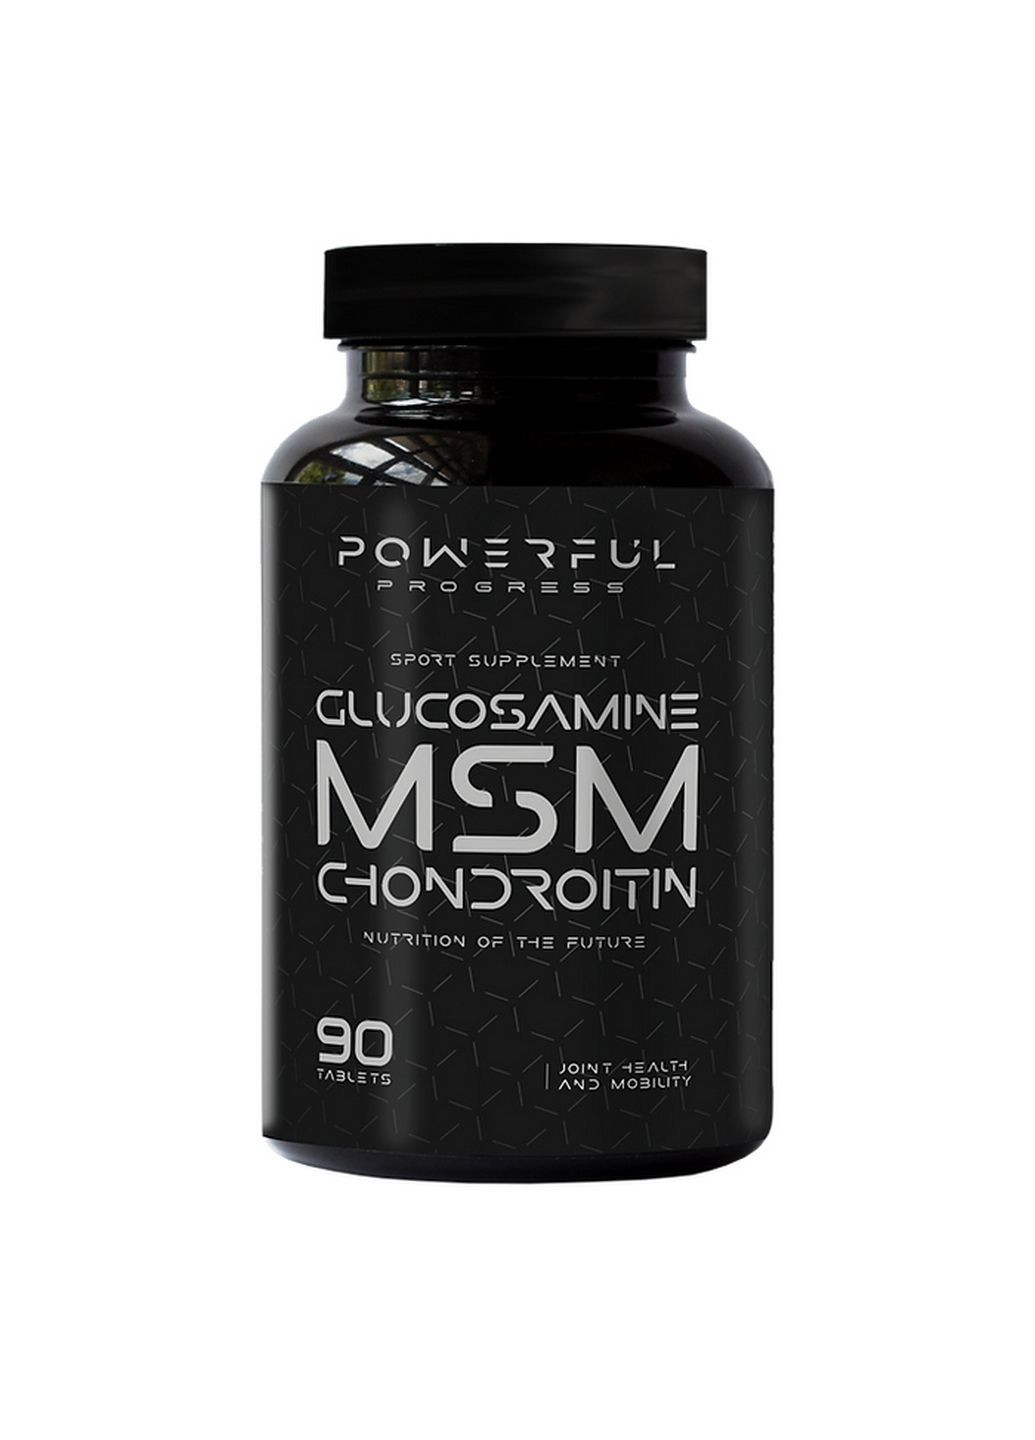 Препарат для суглобів та зв'язок Glucosamine Chondroitin MSM, 90 таблеток Powerful Progress (293418176)